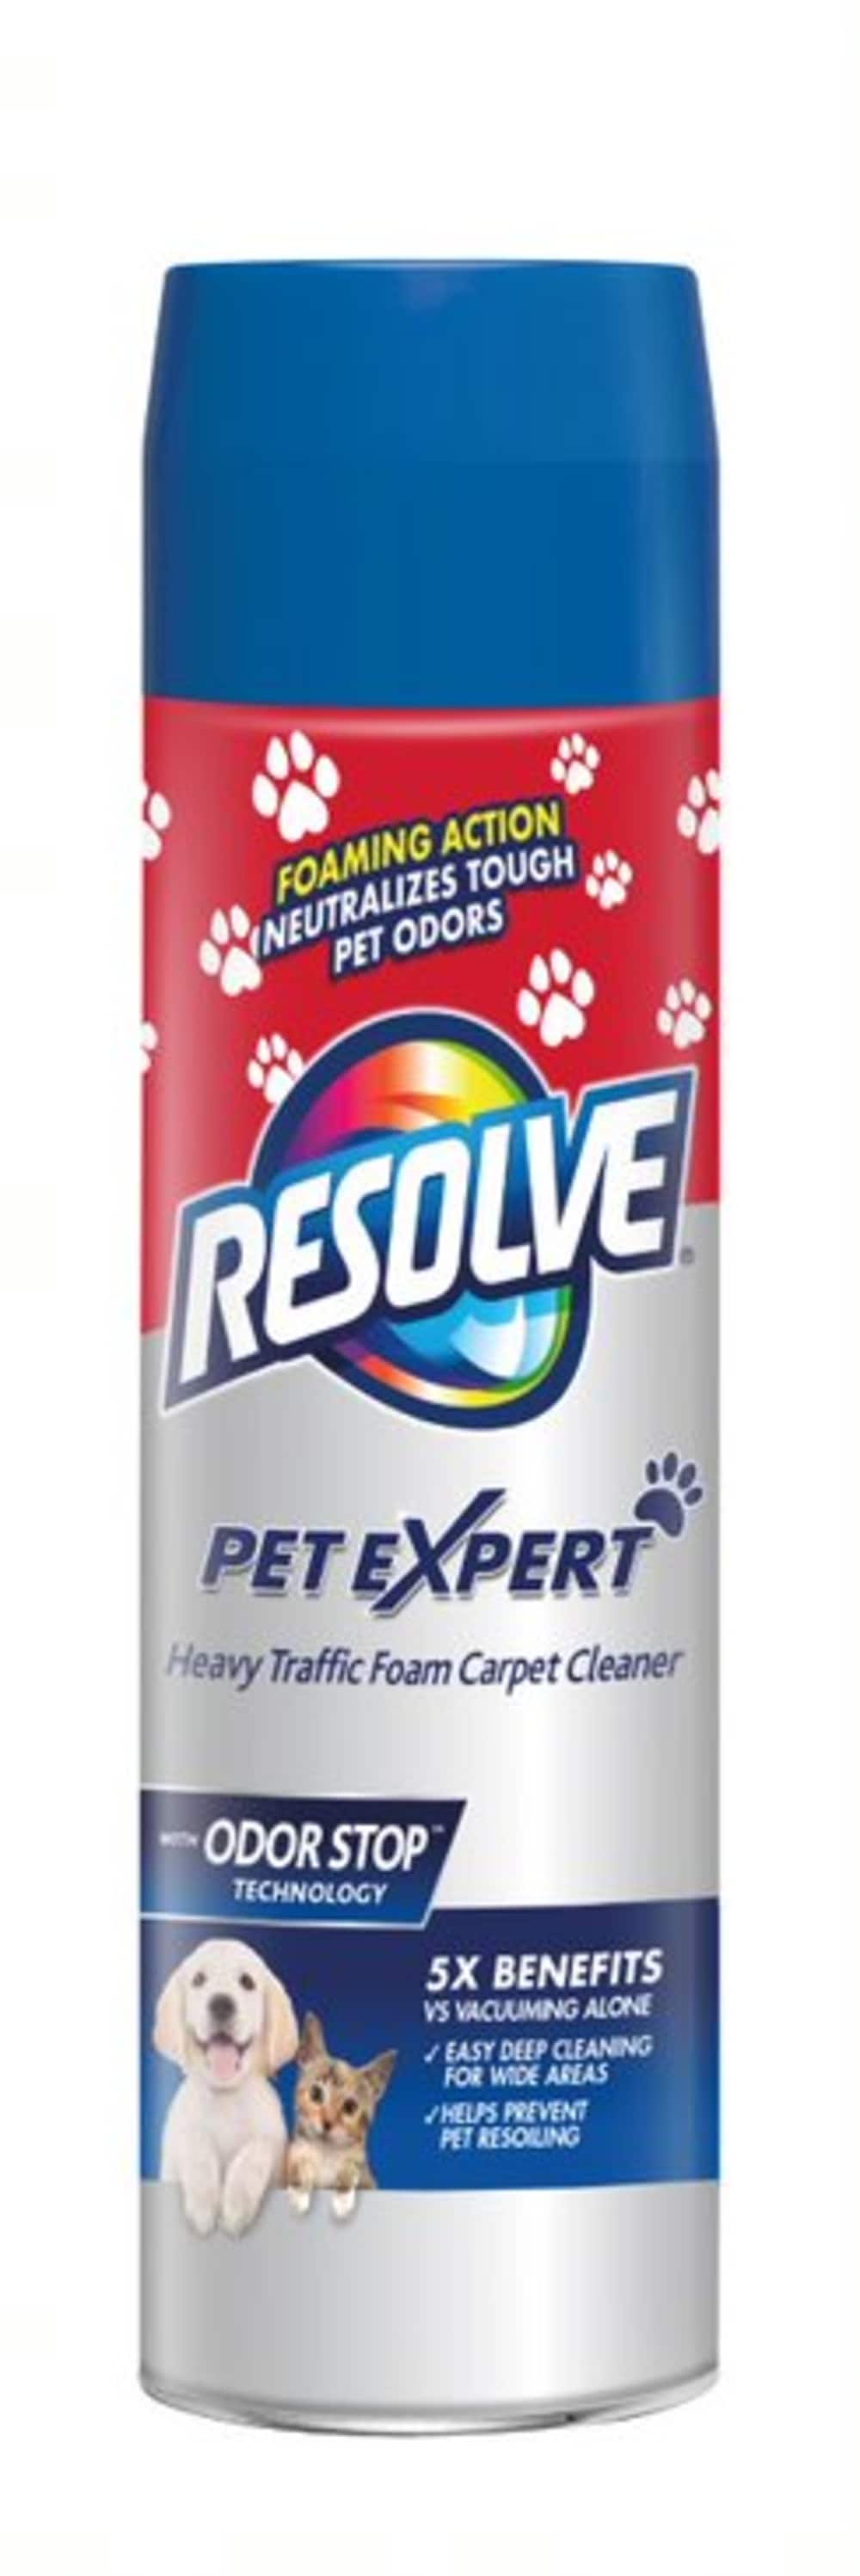 Resolve Pet Formula High Traffic Carpet Cleaner Foam, 22 Ounce